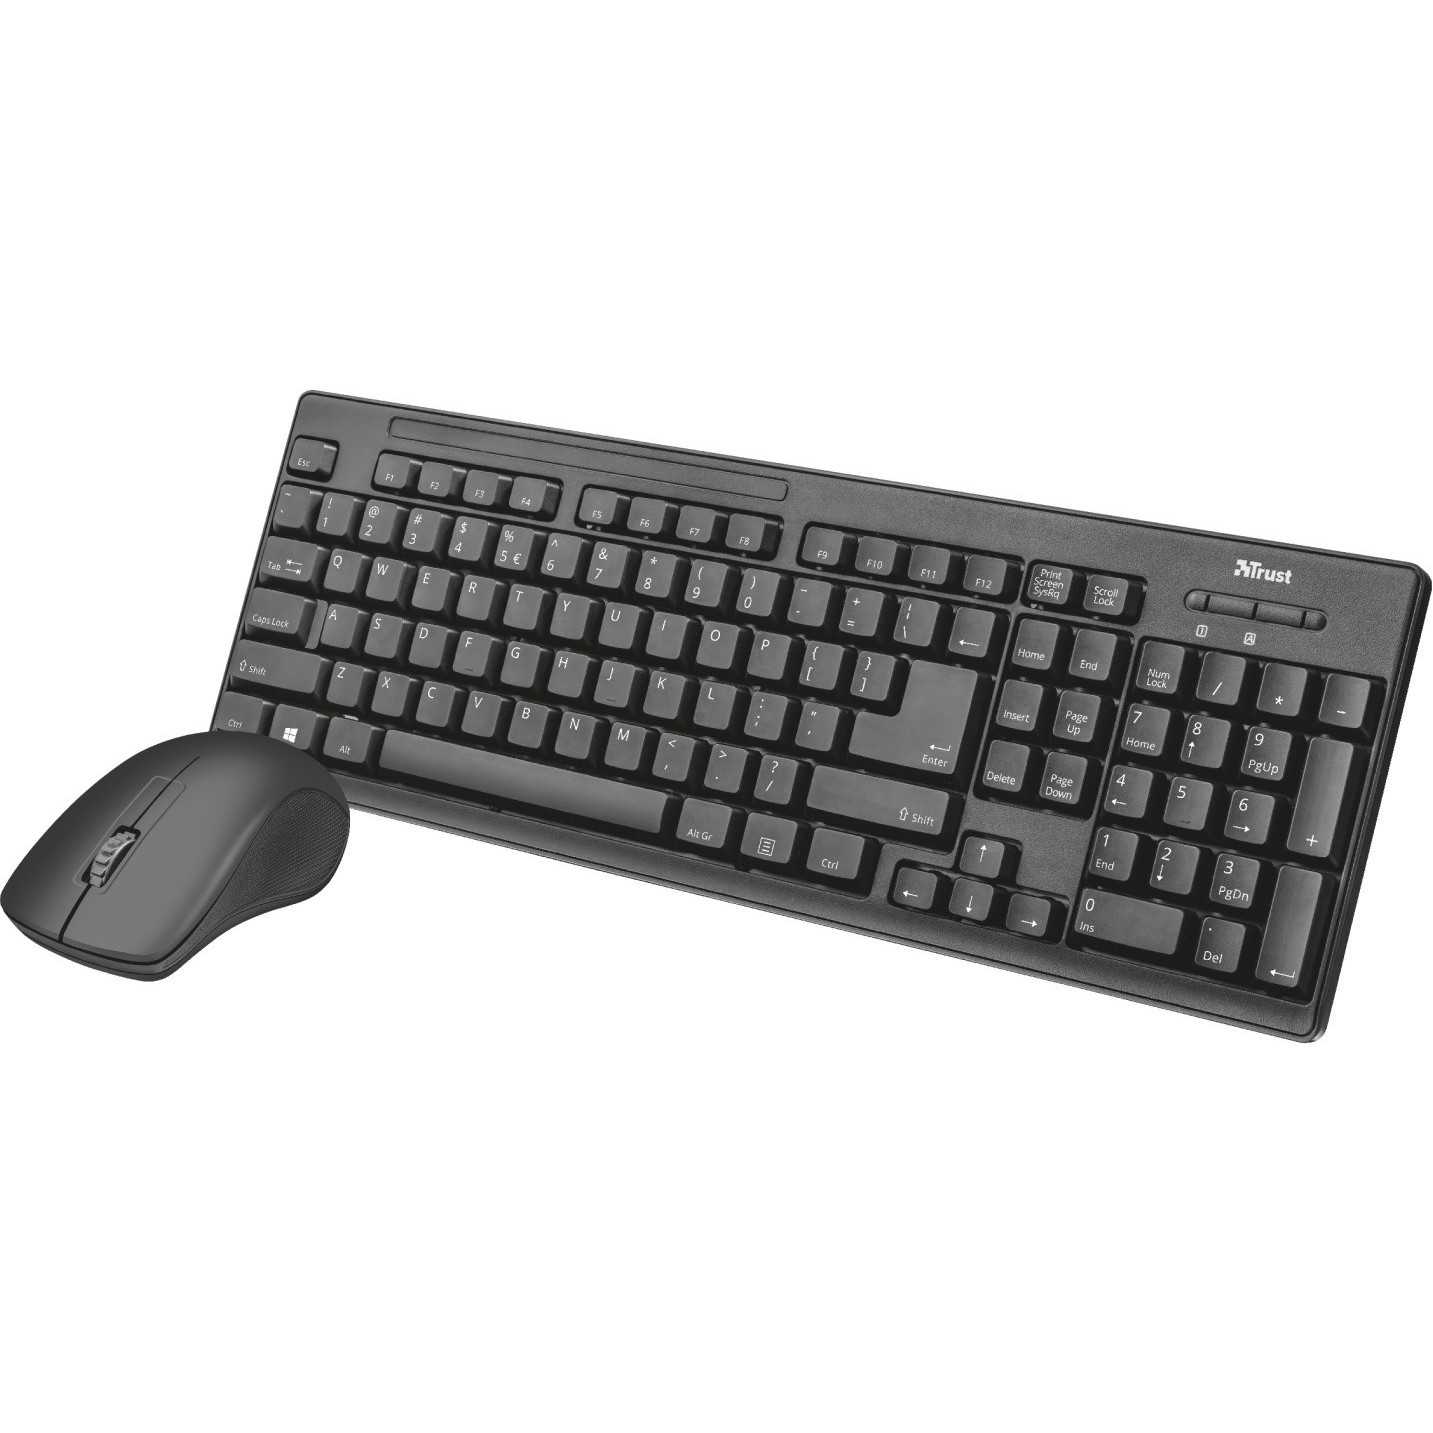 Trust skid wireless keyboard & touchpad black usb - купить , скидки, цена, отзывы, обзор, характеристики - клавиатуры